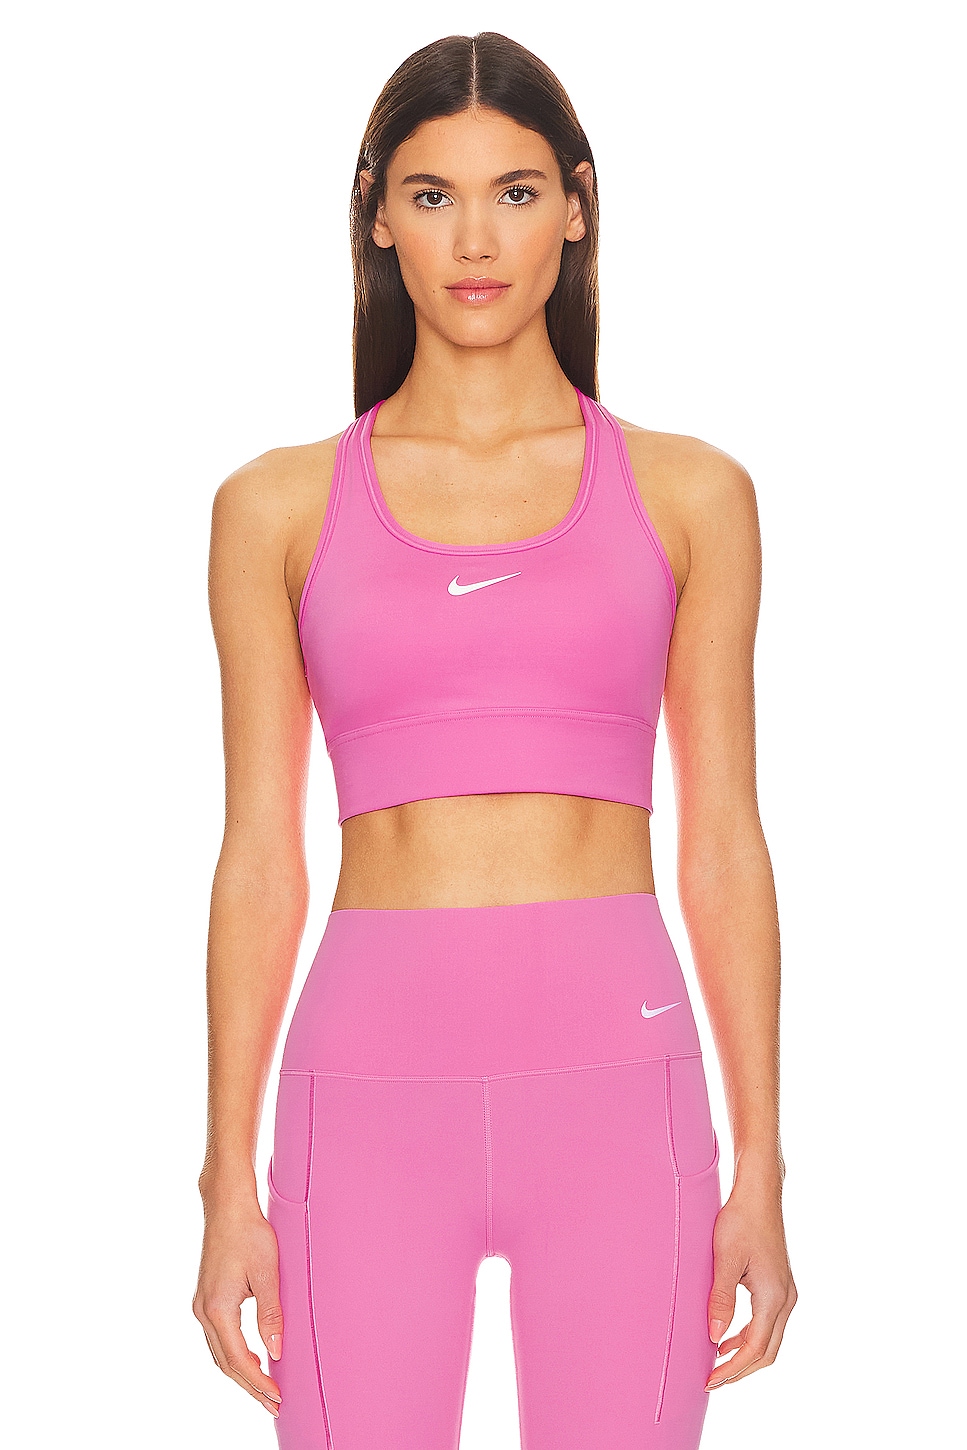 Nike Padded Longline Sports Bra in Playful Pink & White